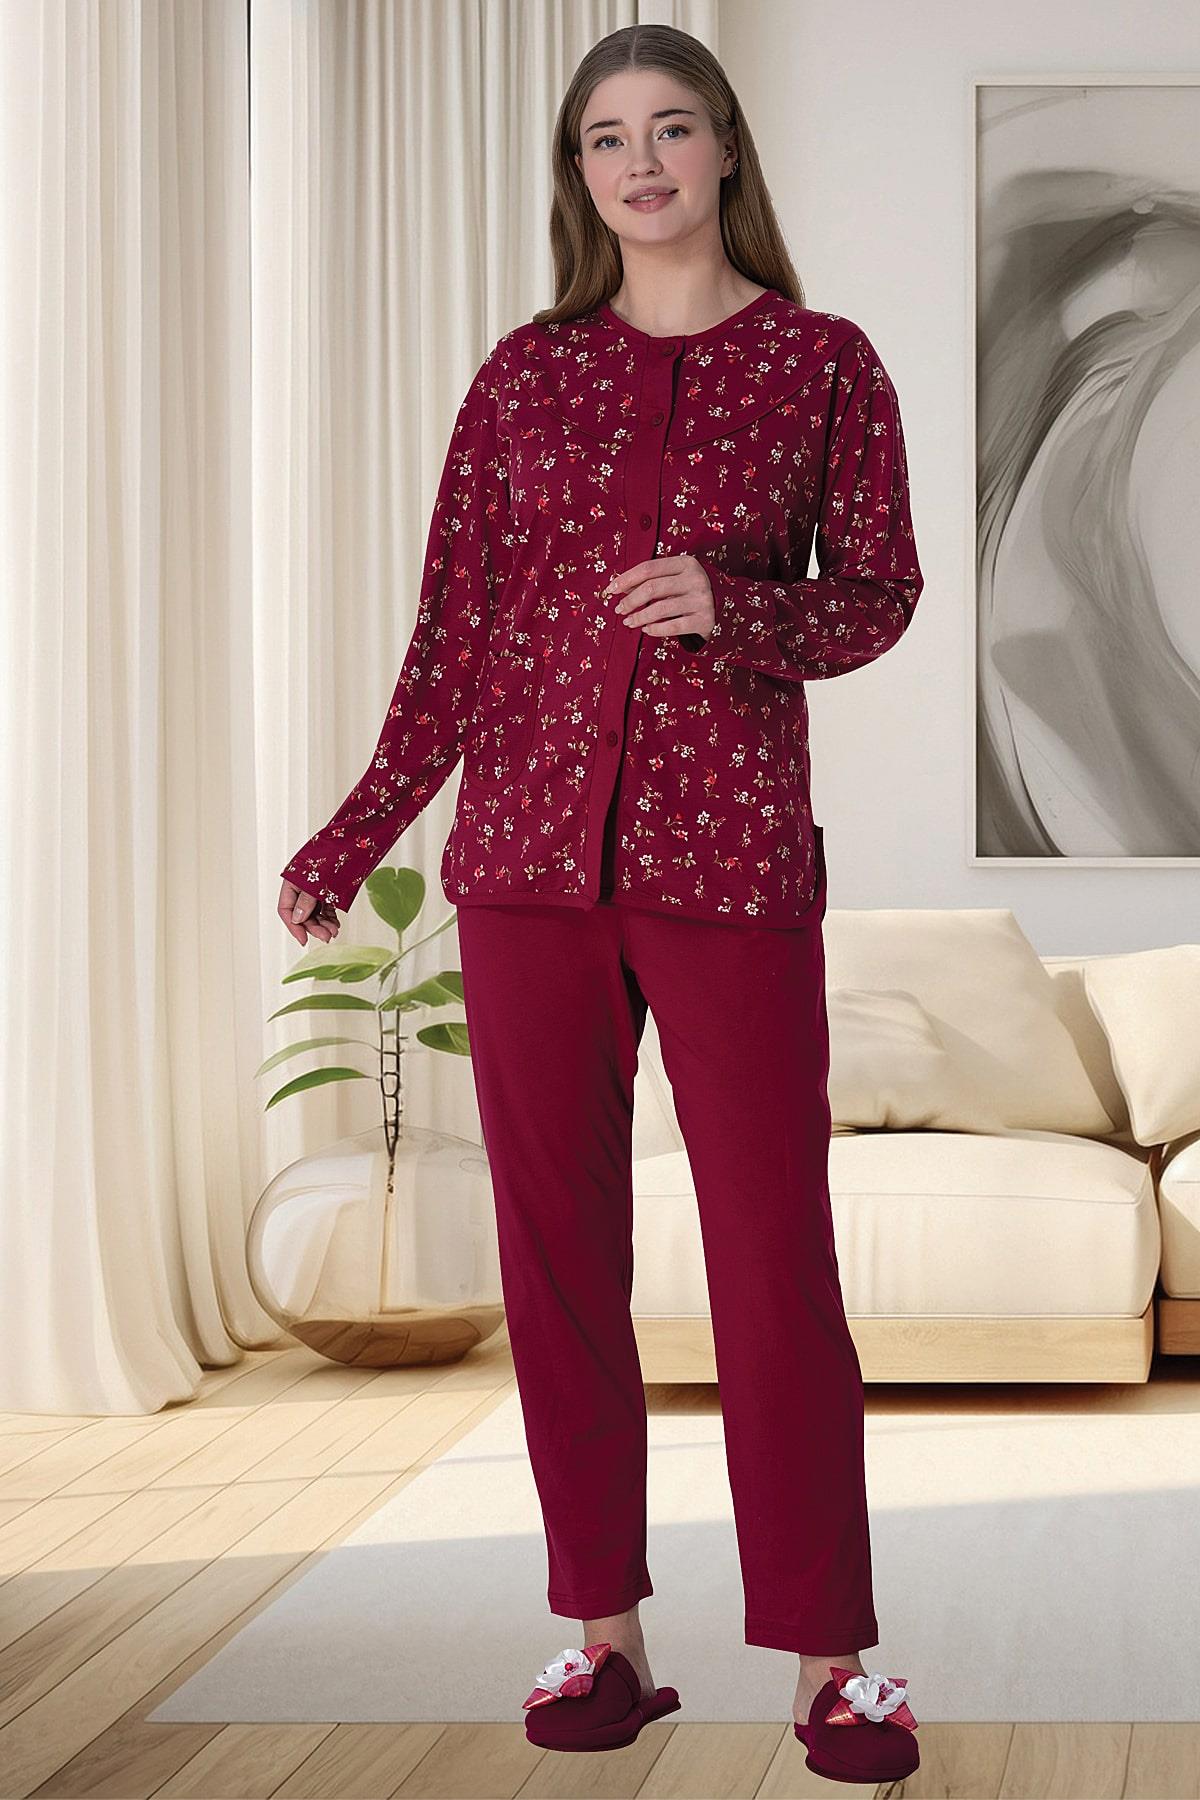 Shopymommy 6018 Flower Plus Size Maternity & Nursing Pajamas Claret Red